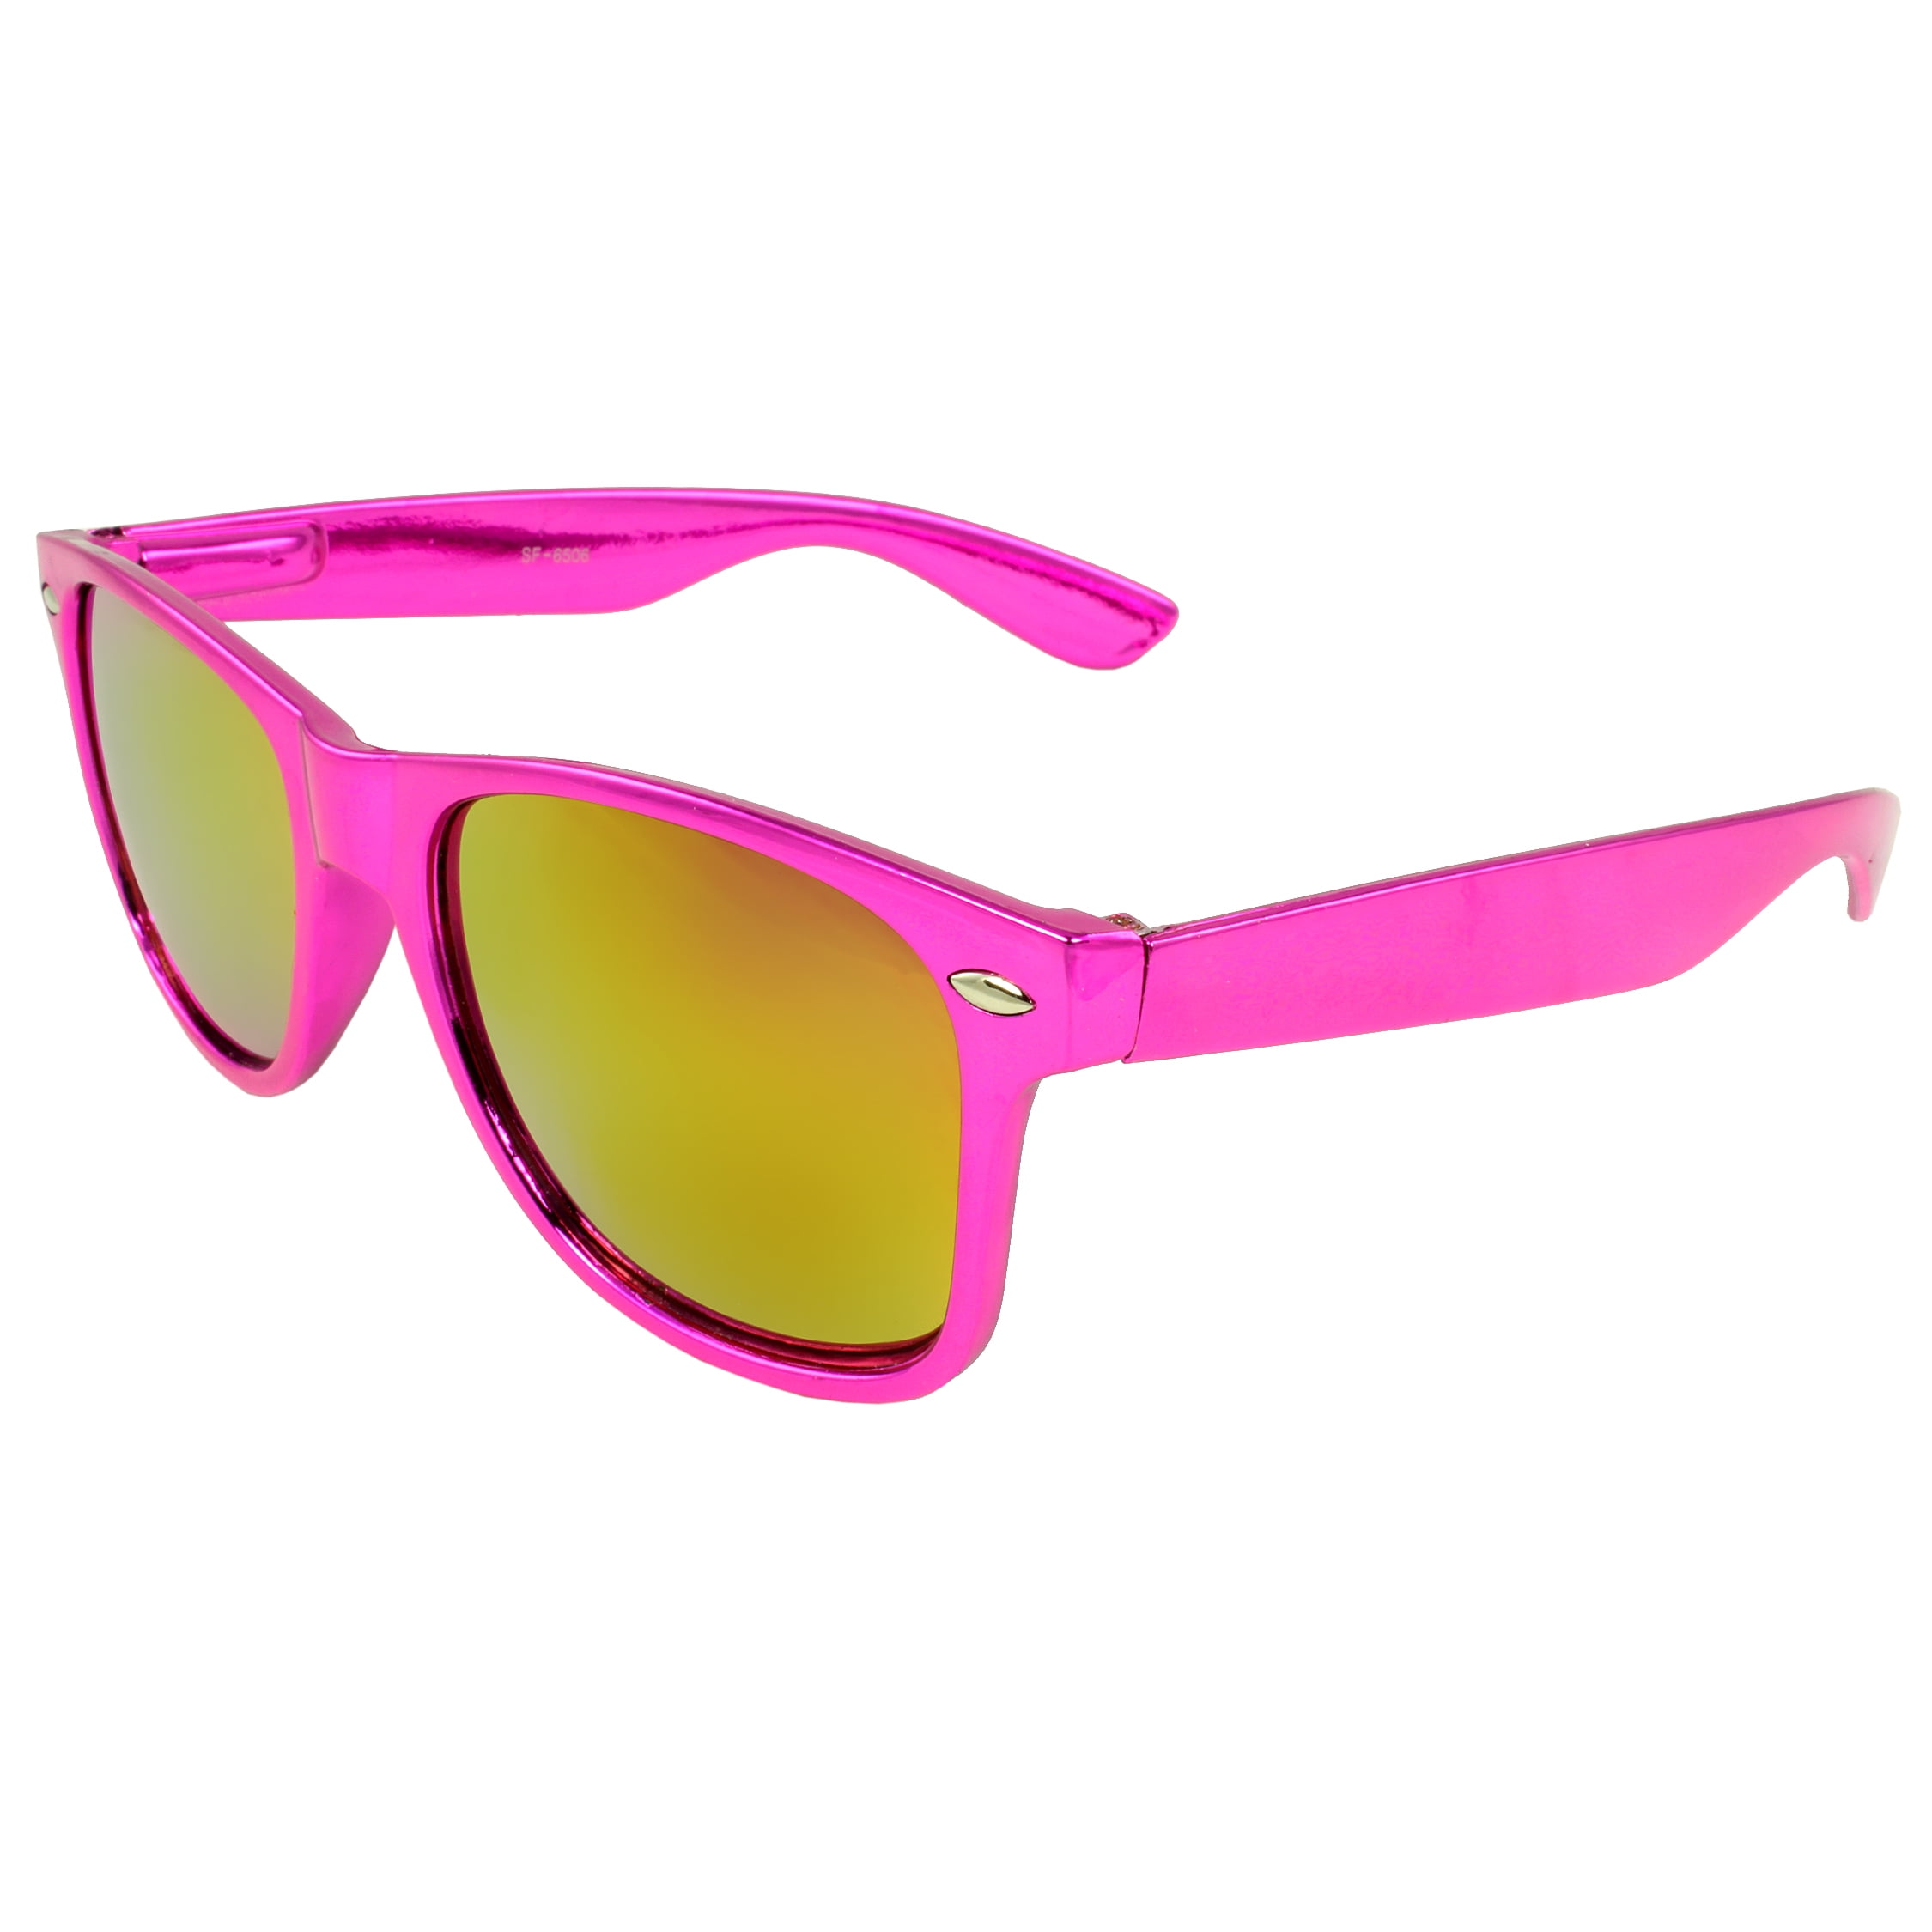 Epic Eyewear Stylish Retro Horn Rimmed Sunglasses Pink Frame Pink